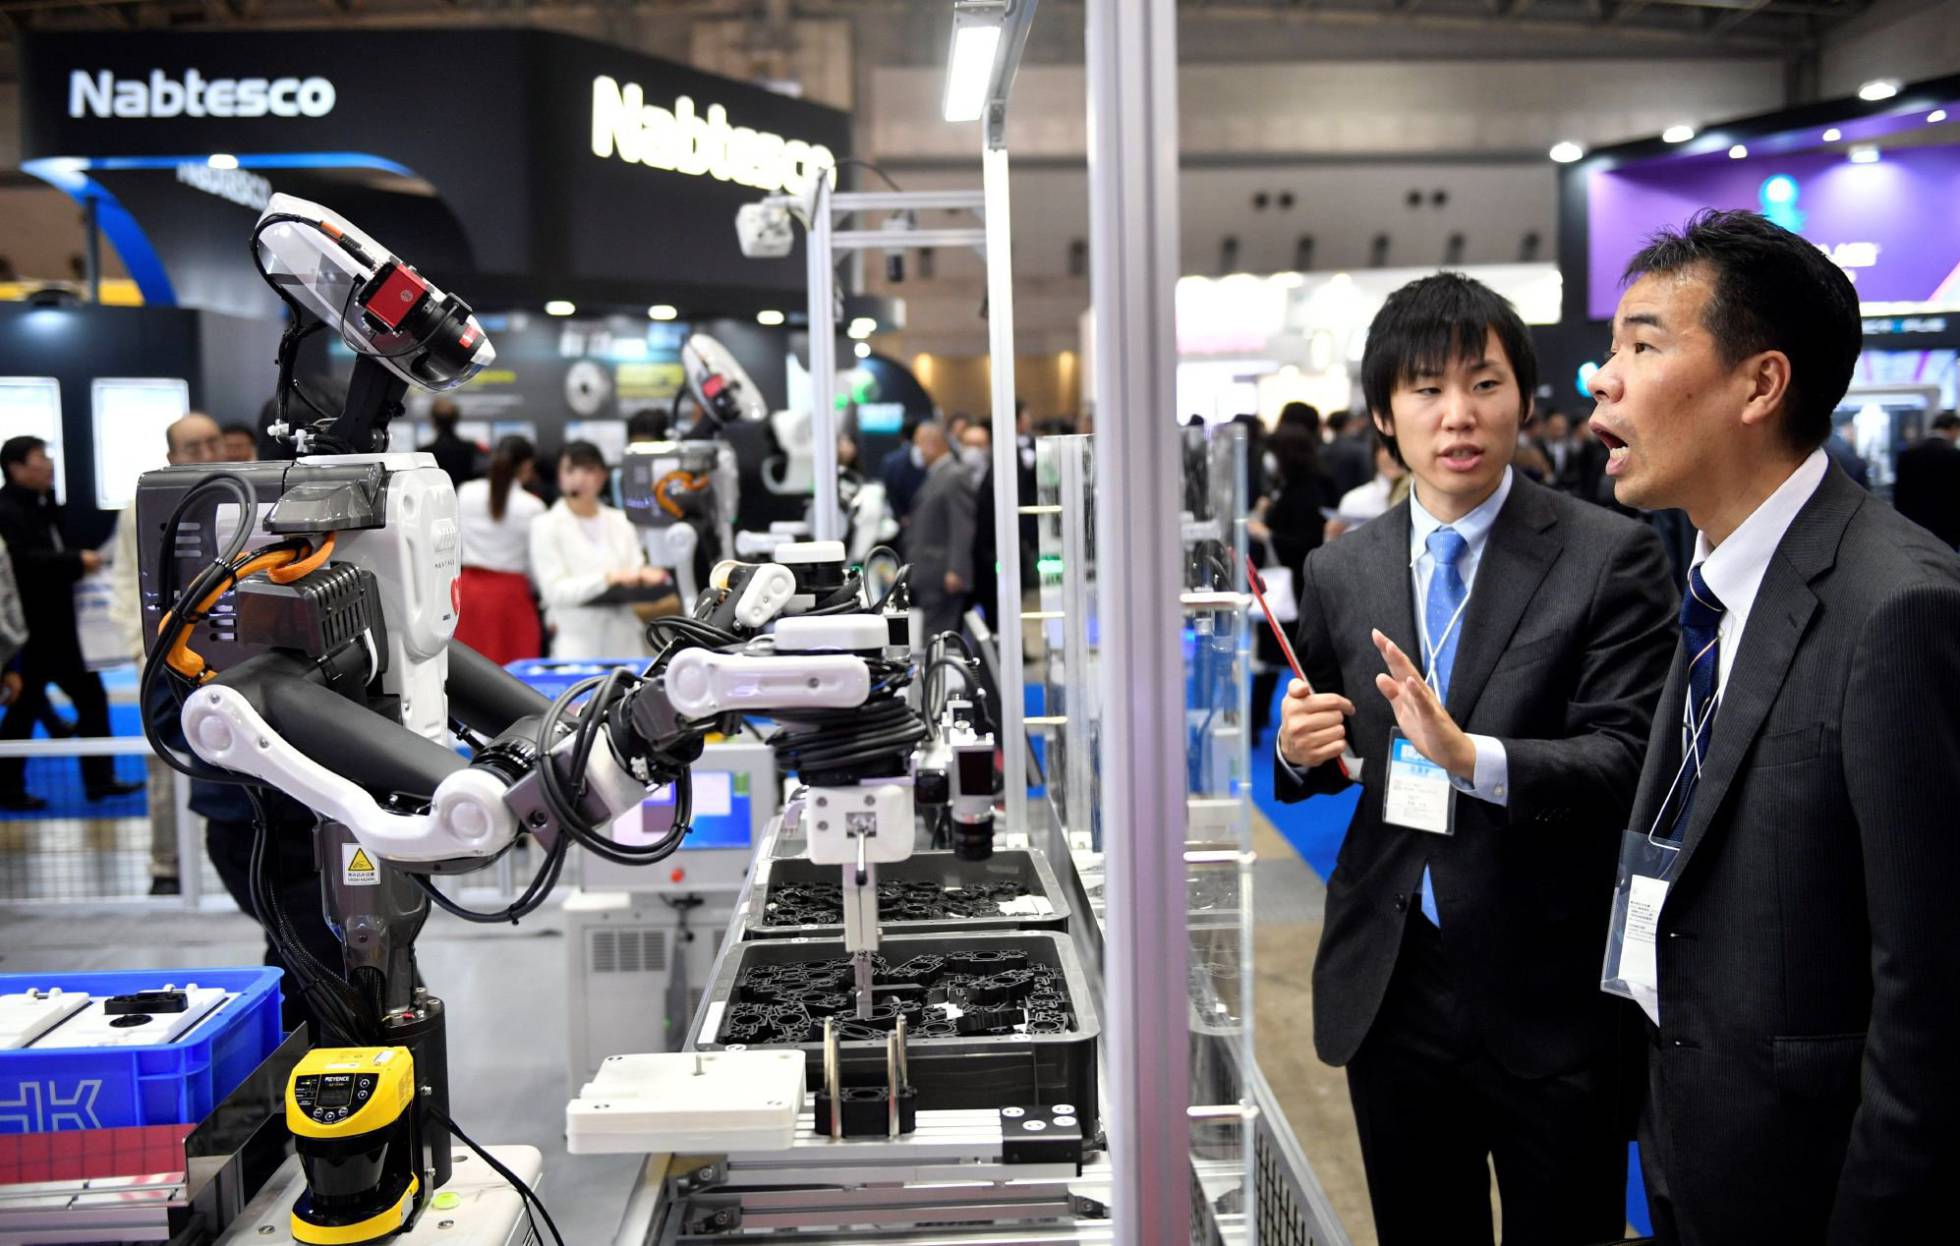 Attendees watch an industrial robot at a robotics fair in Tokyo. Source: EFE